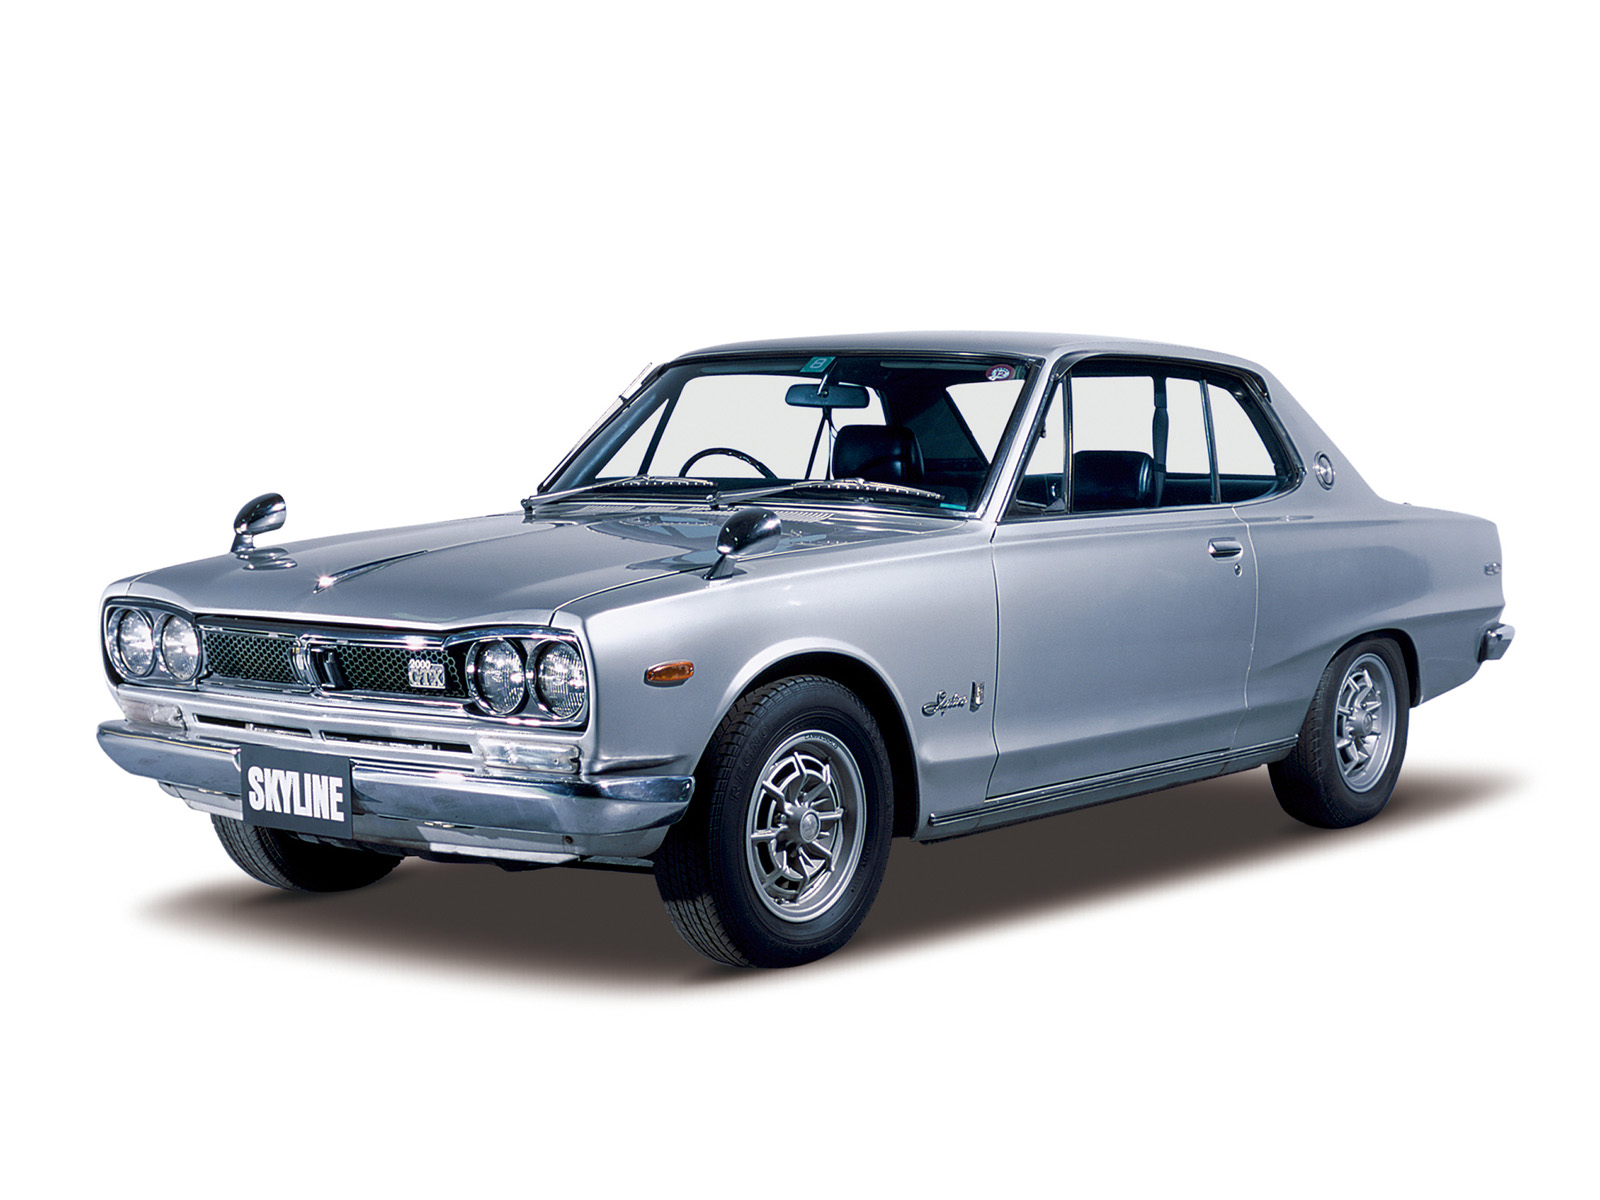 1971, Nissan, Skyline, 2000gt x, Coupe, Kgc10, Datsun, Classic Wallpaper